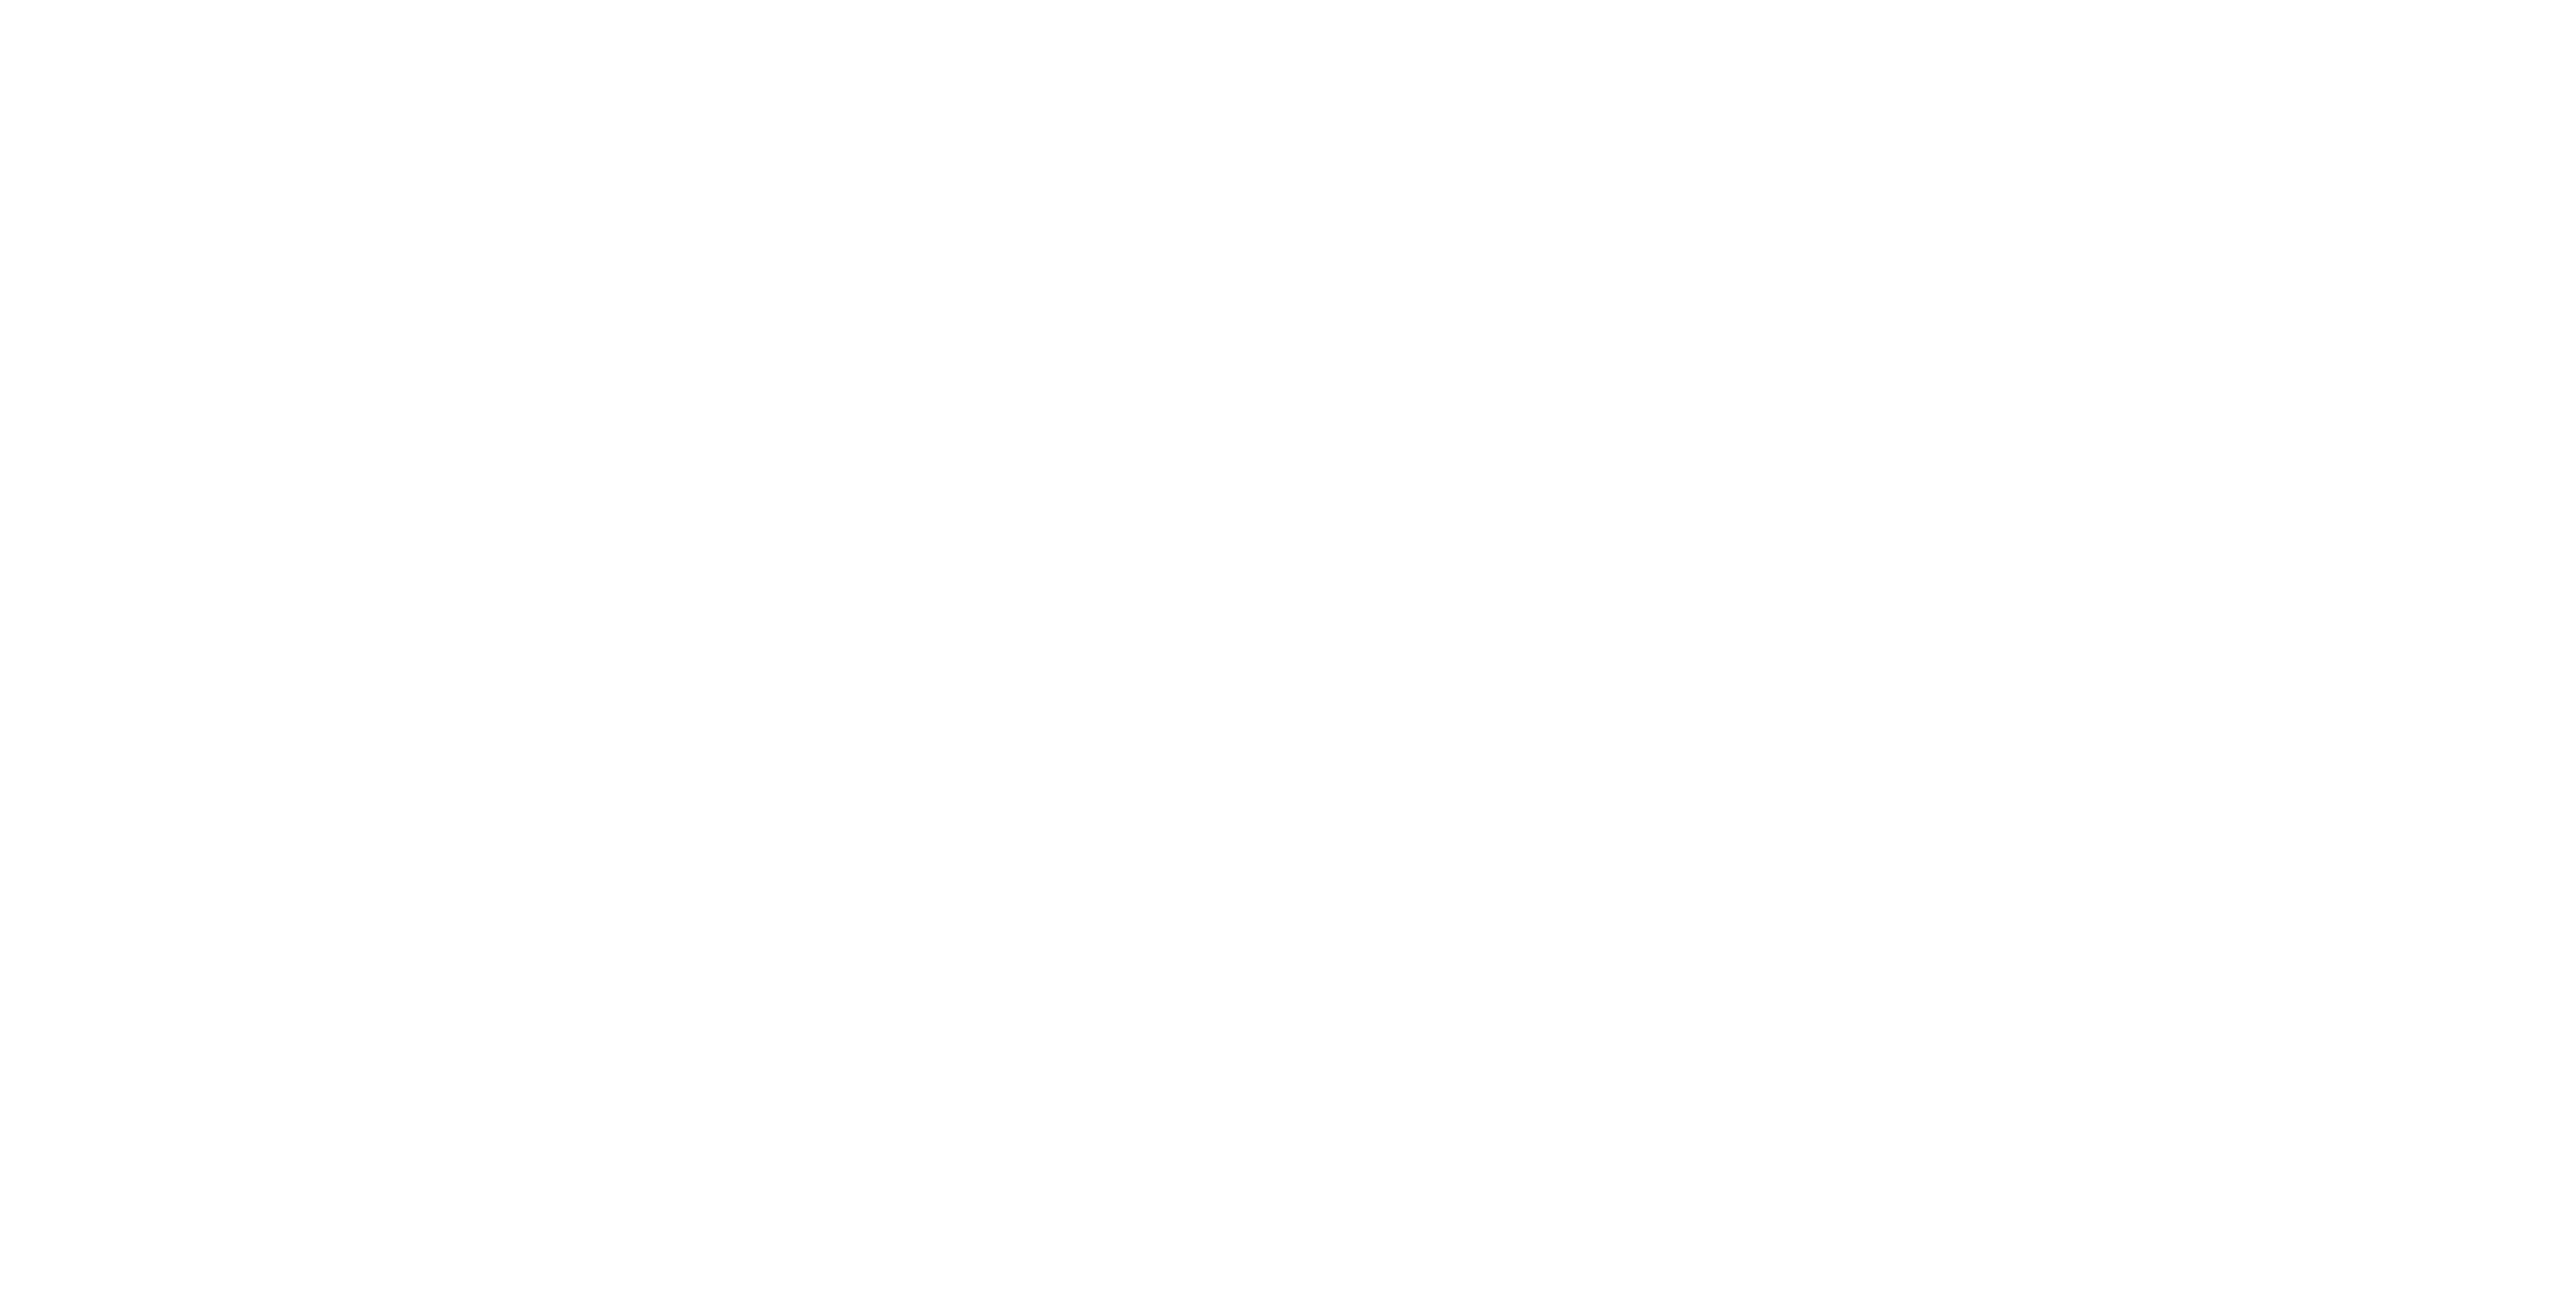 Up people, profits, purpose